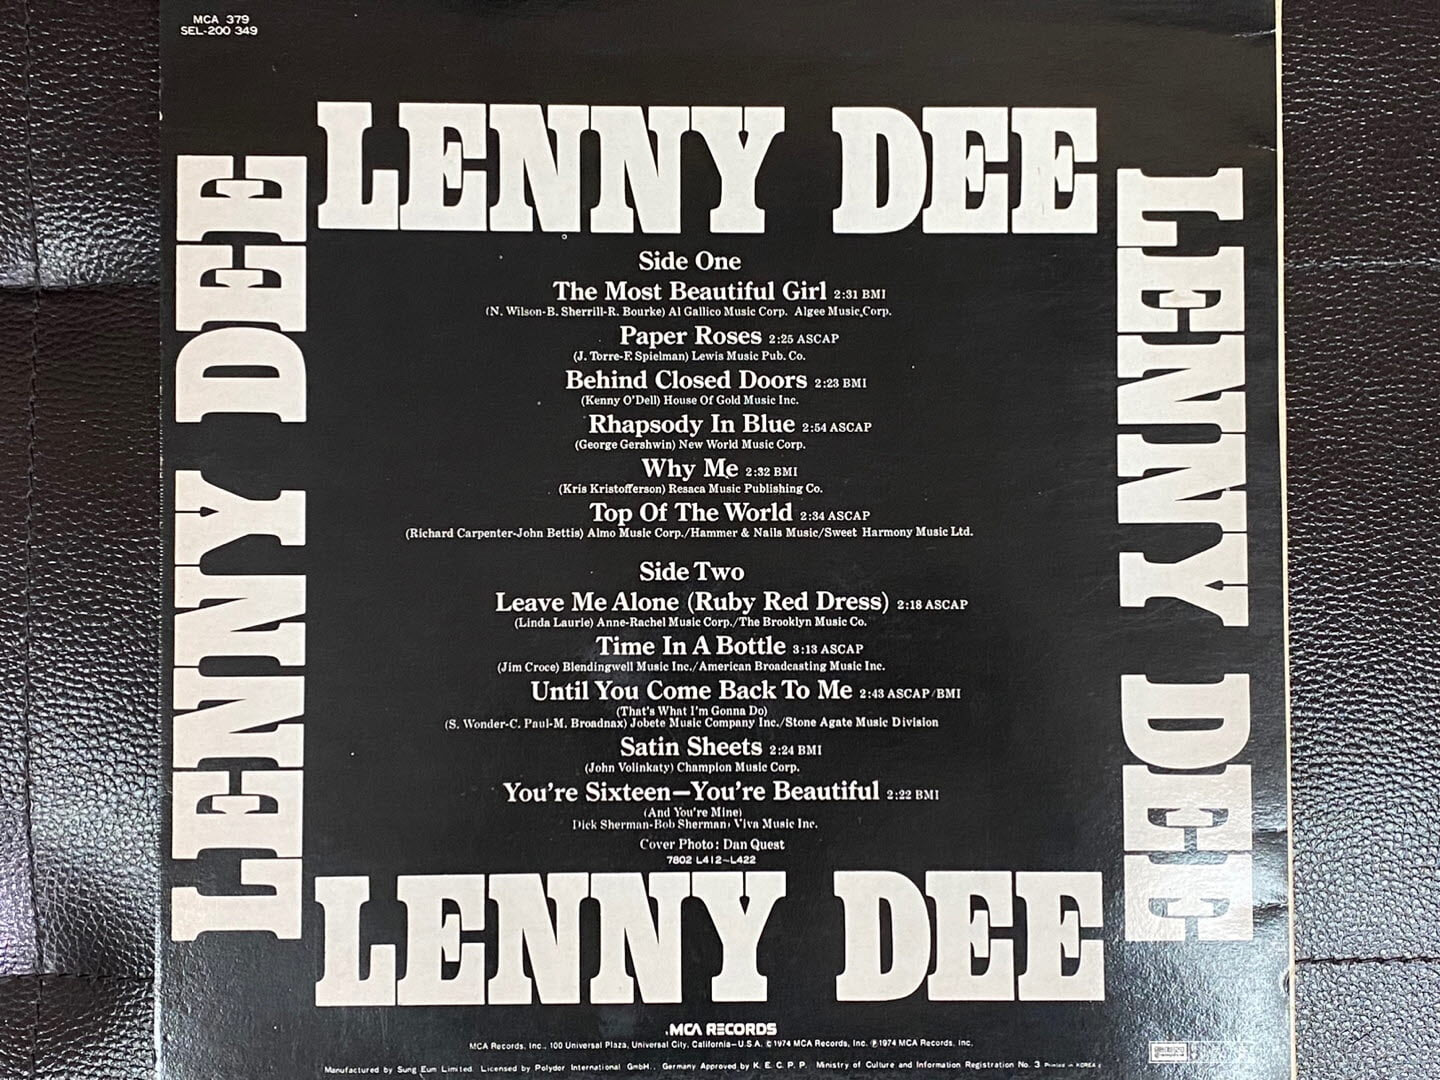 [LP] 레니 디 - Lenny Dee - The Most Beautiful Girl LP [성음-라이센스반]